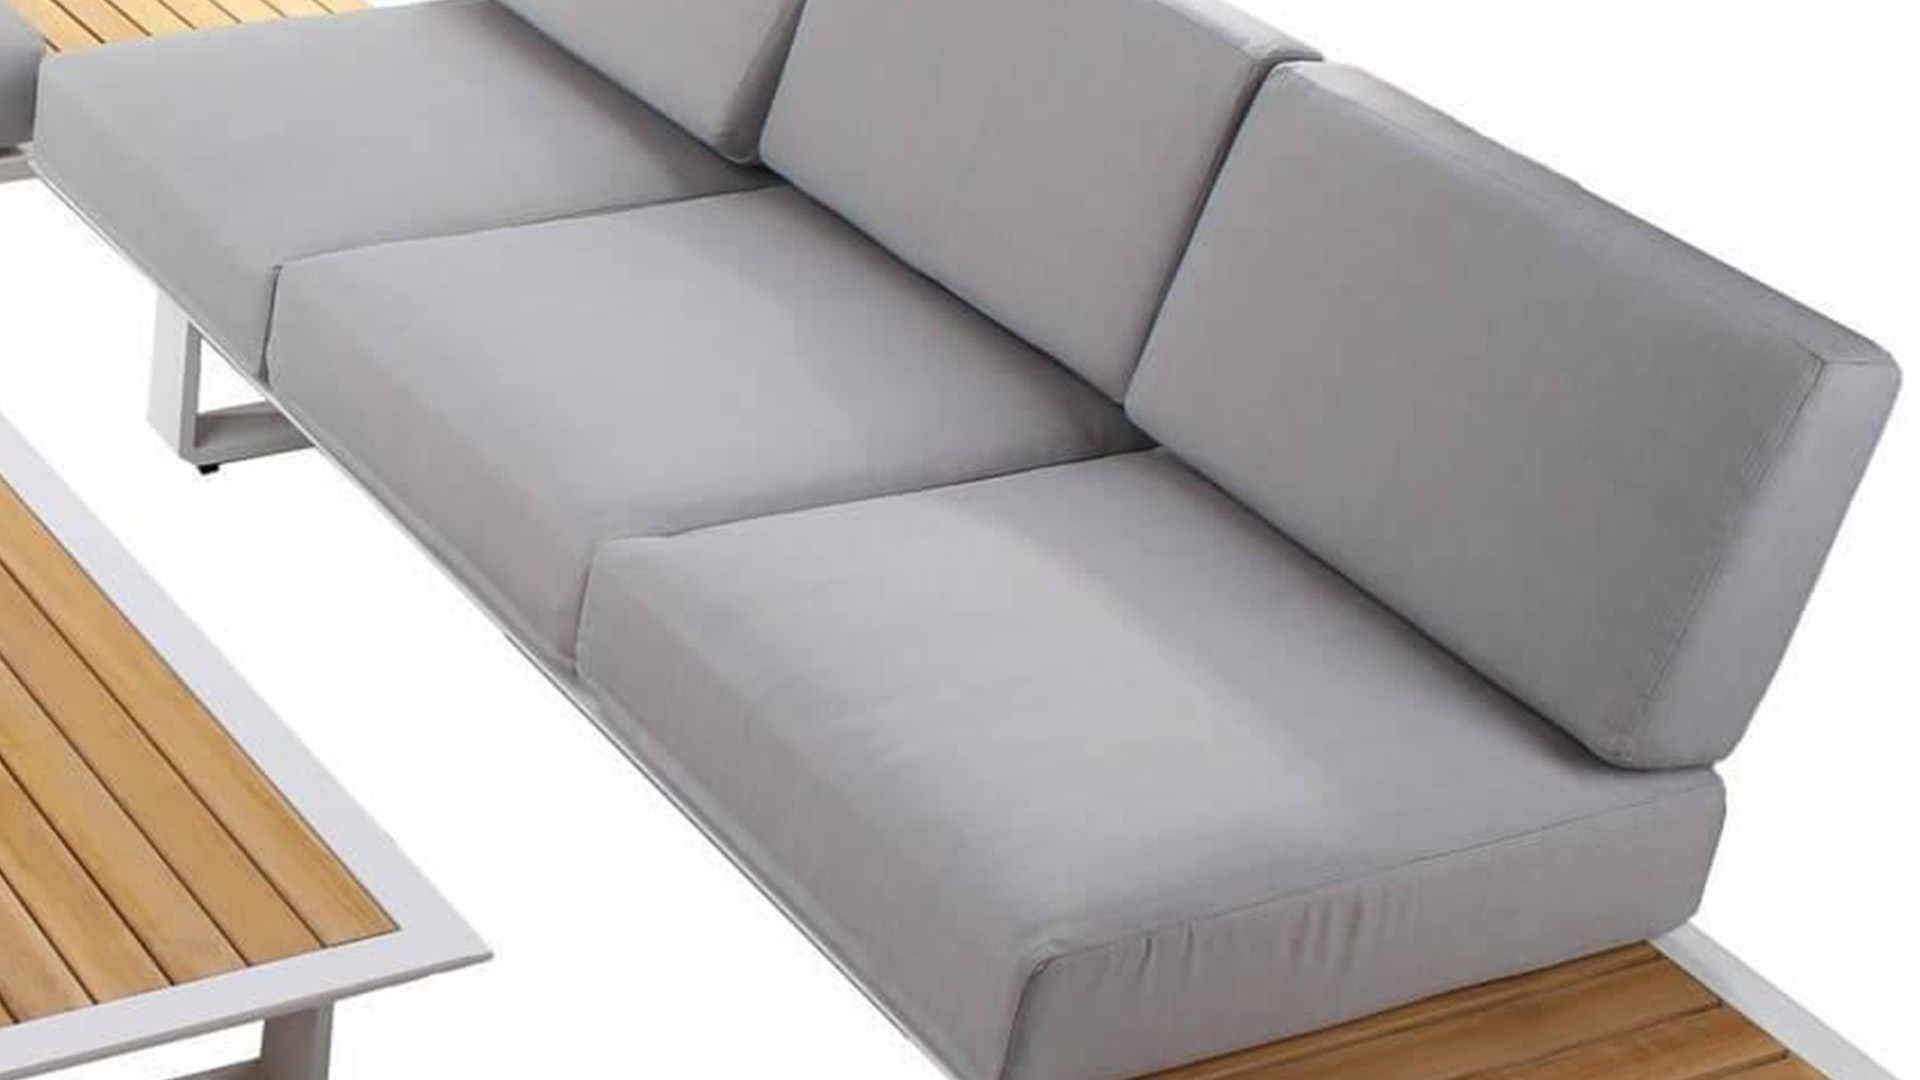 Alu Dyna Lounge Set Alu White With Teak Top + Grey QDF Seat and Back Cushions 286cm x 230cm x H78cm